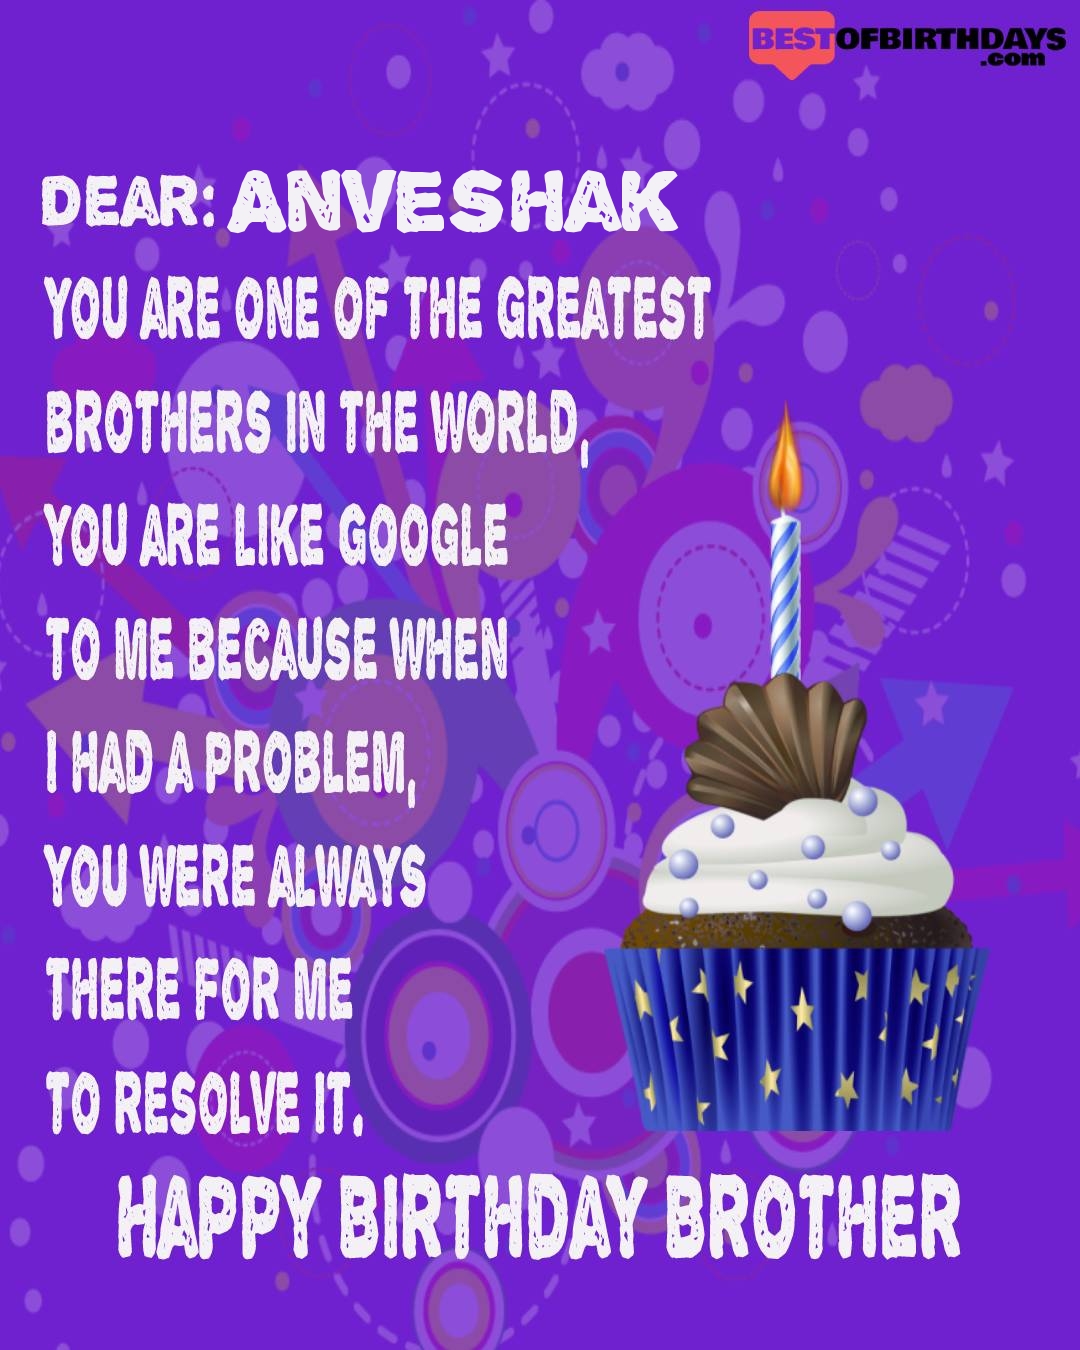 Happy birthday anveshak bhai brother bro